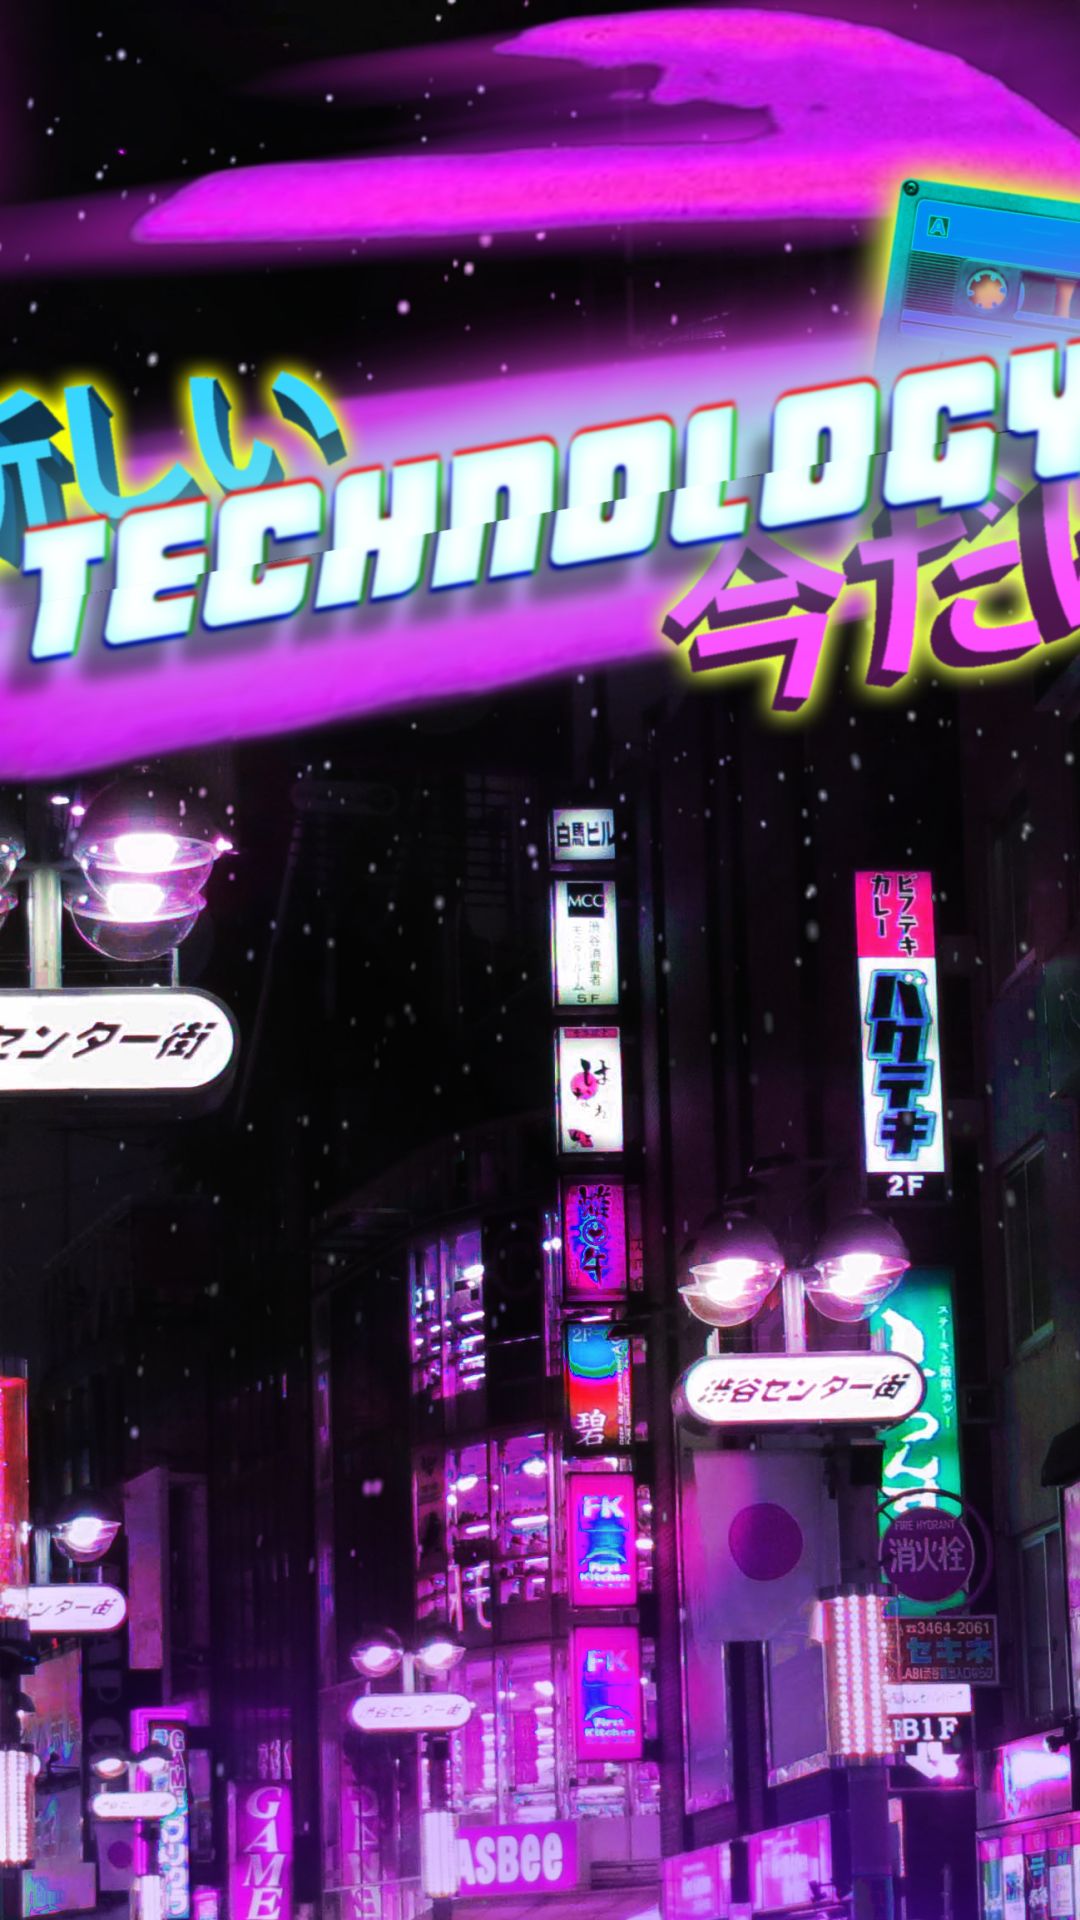 artistic, vaporwave, magenta, pink, retro wave, tokyo, night, retro Phone Background